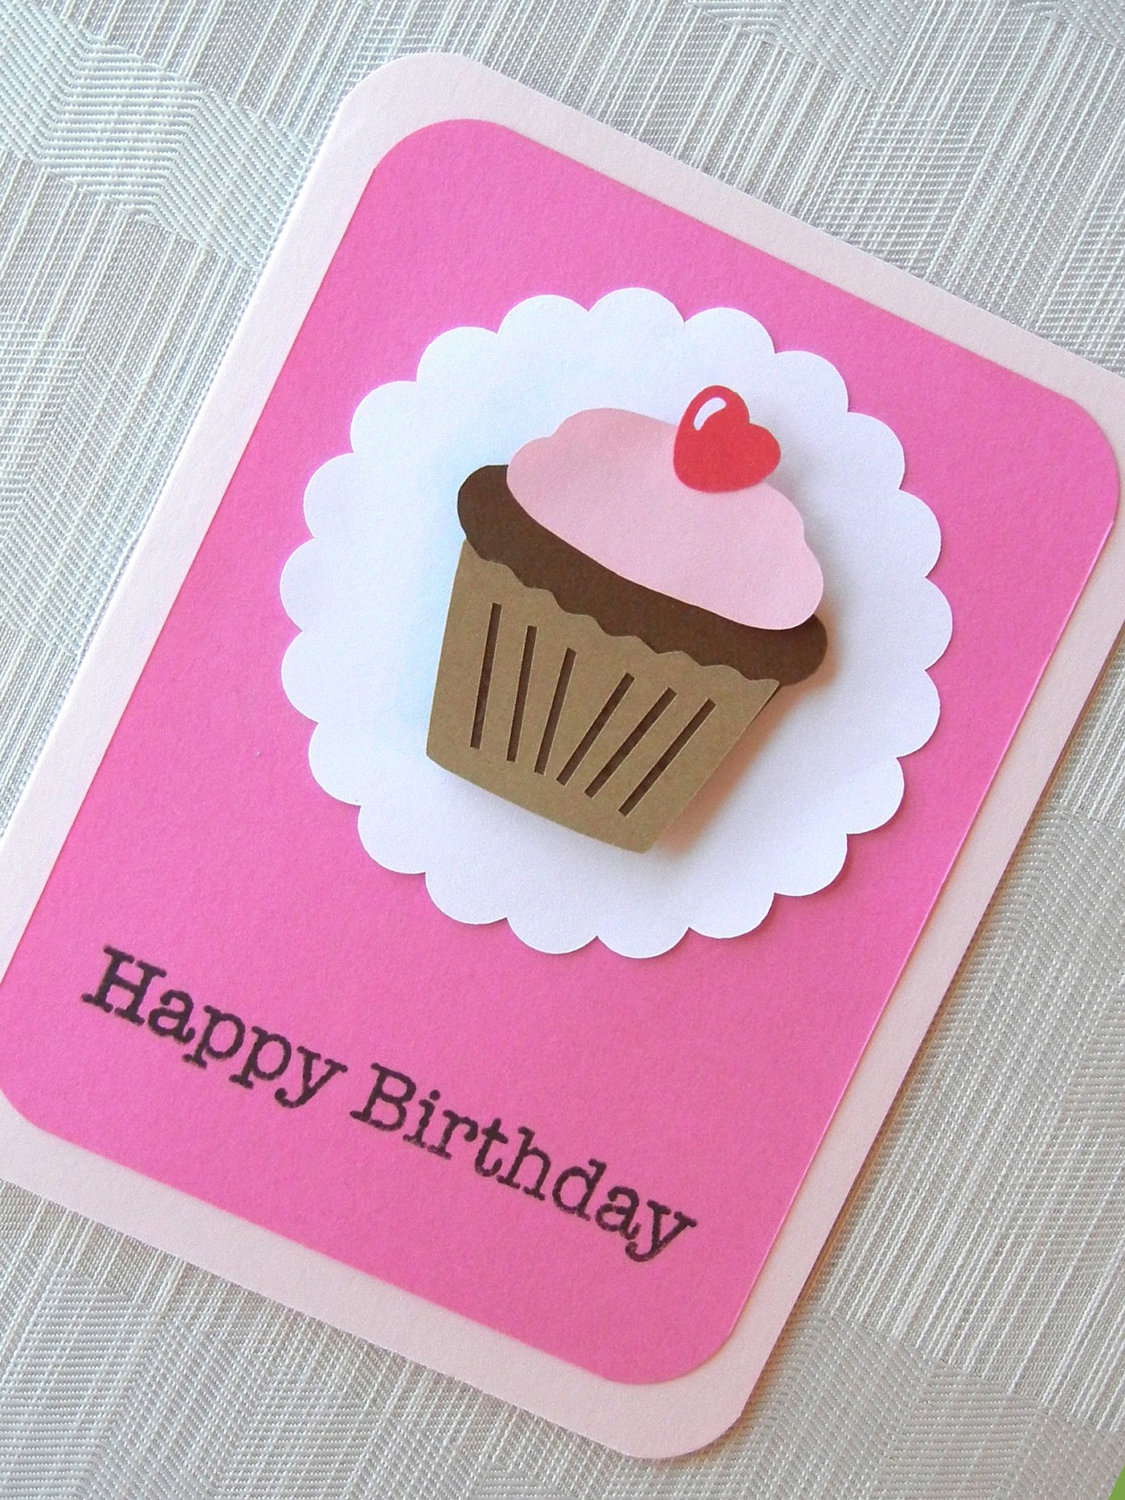 Making Birthday Cards Homemade Birthday Card Ideas Easy Diy Birthday Cards Ideas And Designs